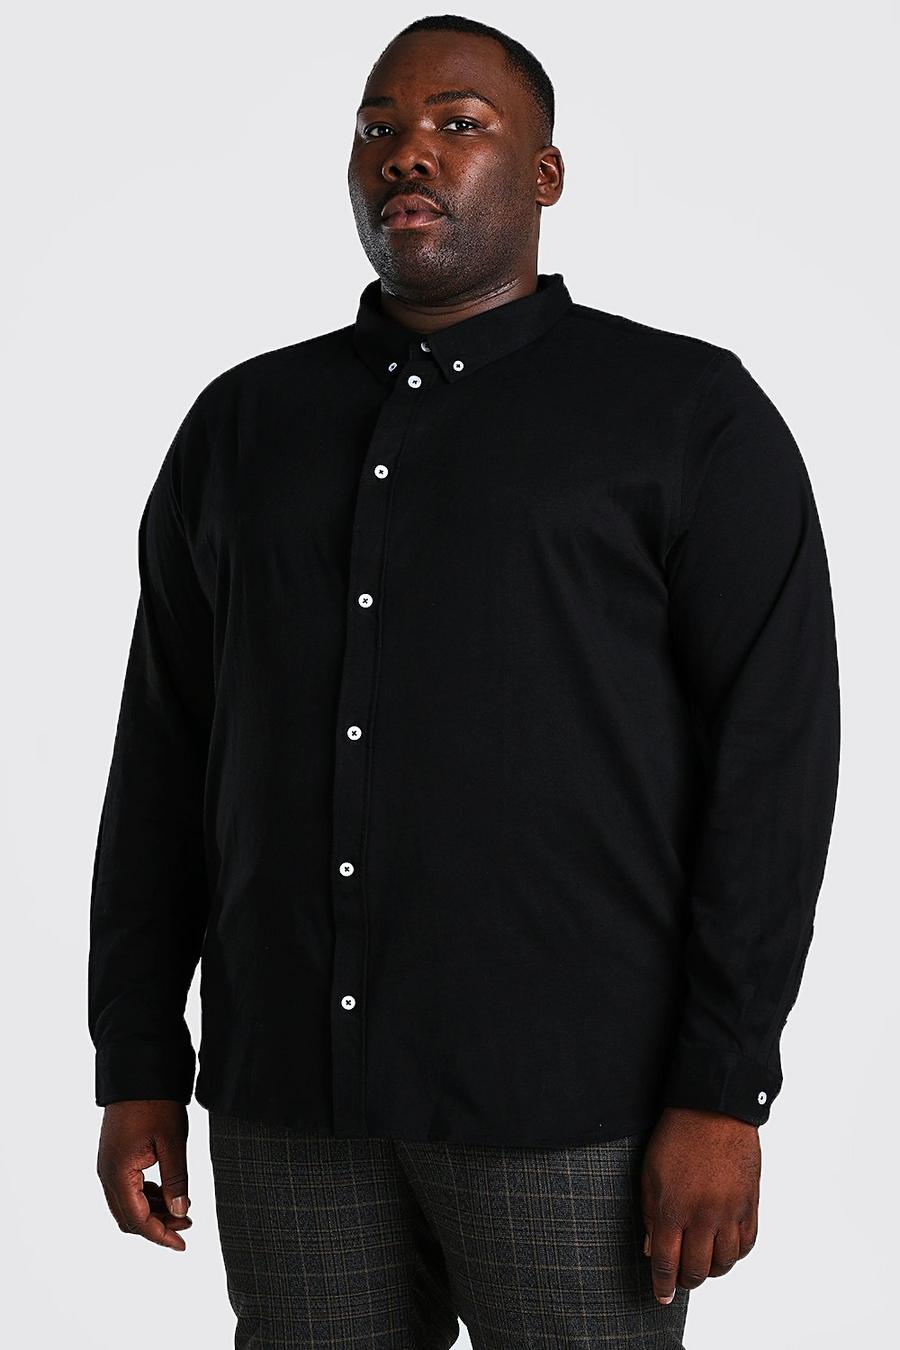 T-shirt Plus Size in maglia con trama, Nero negro image number 1